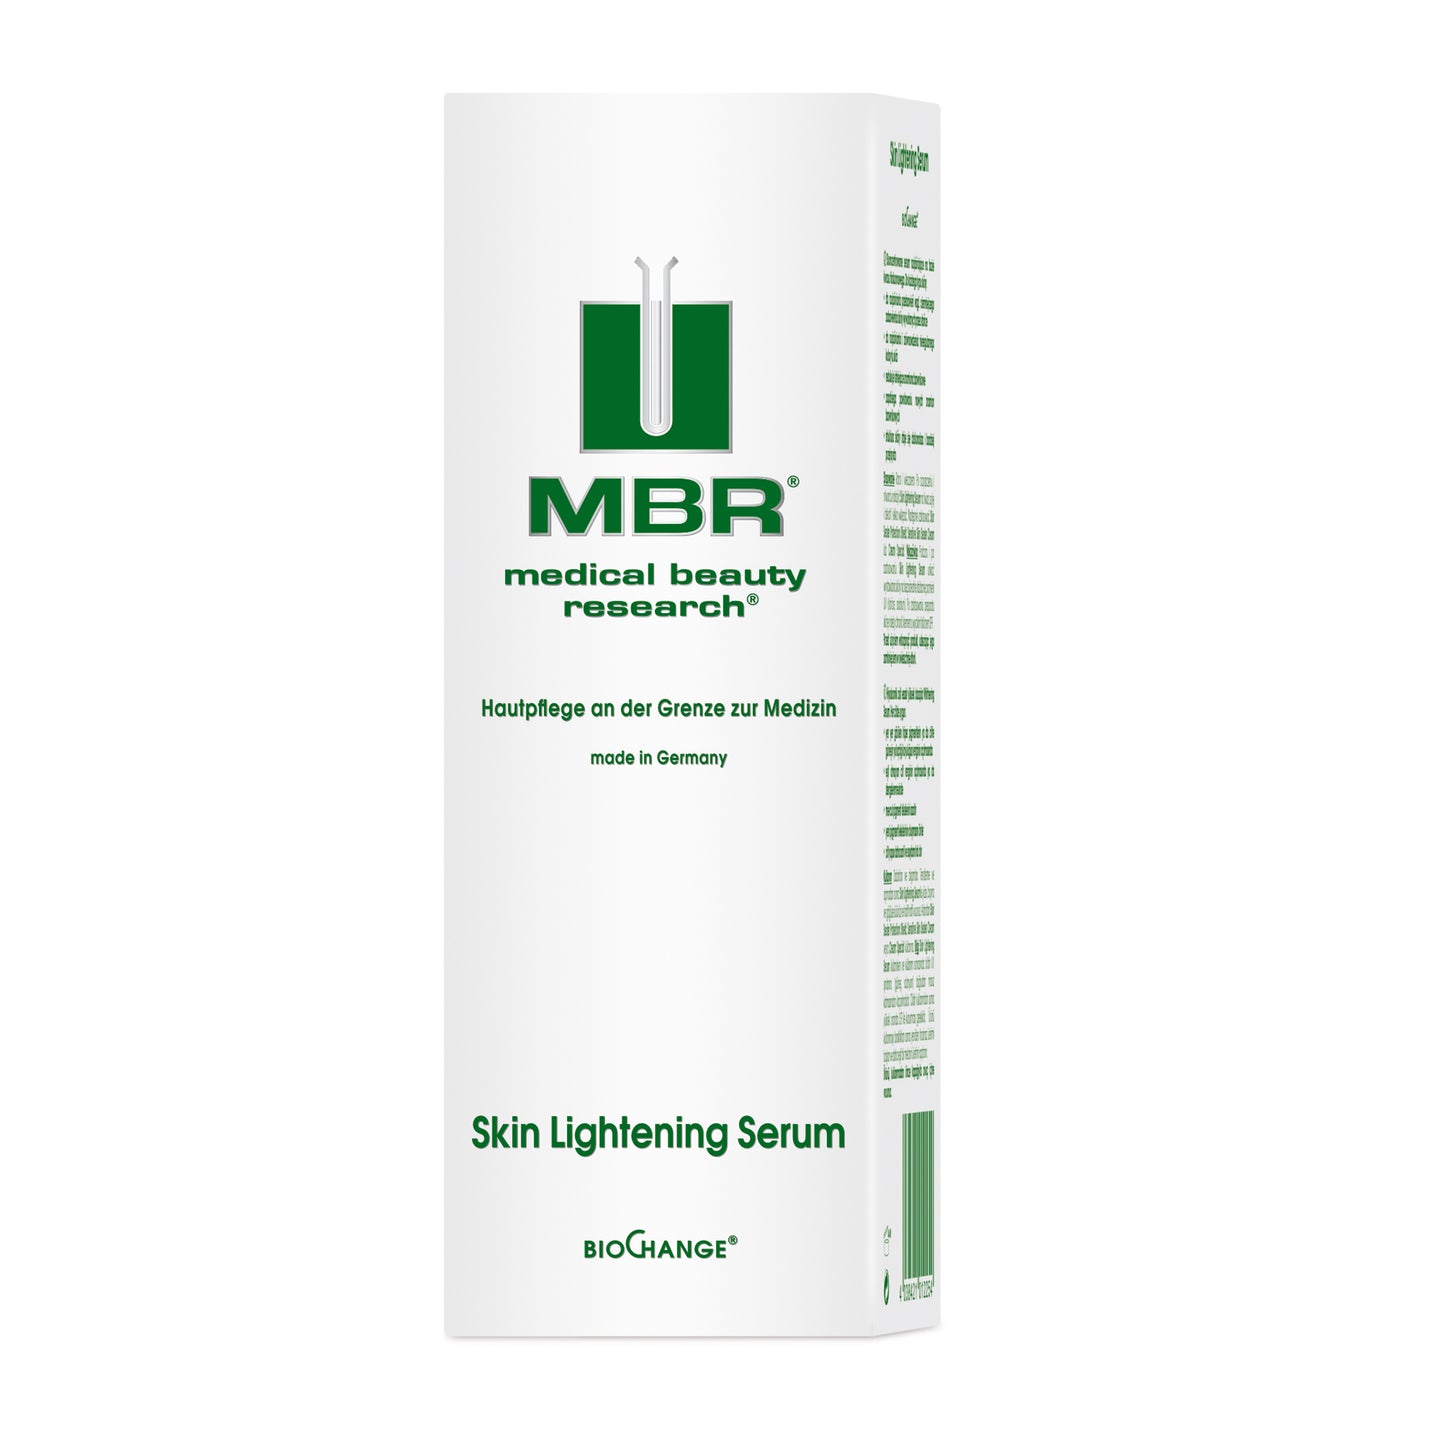 Skin Lightening Serum: Hydrating Serum that Balances and Lightens Pigmentation